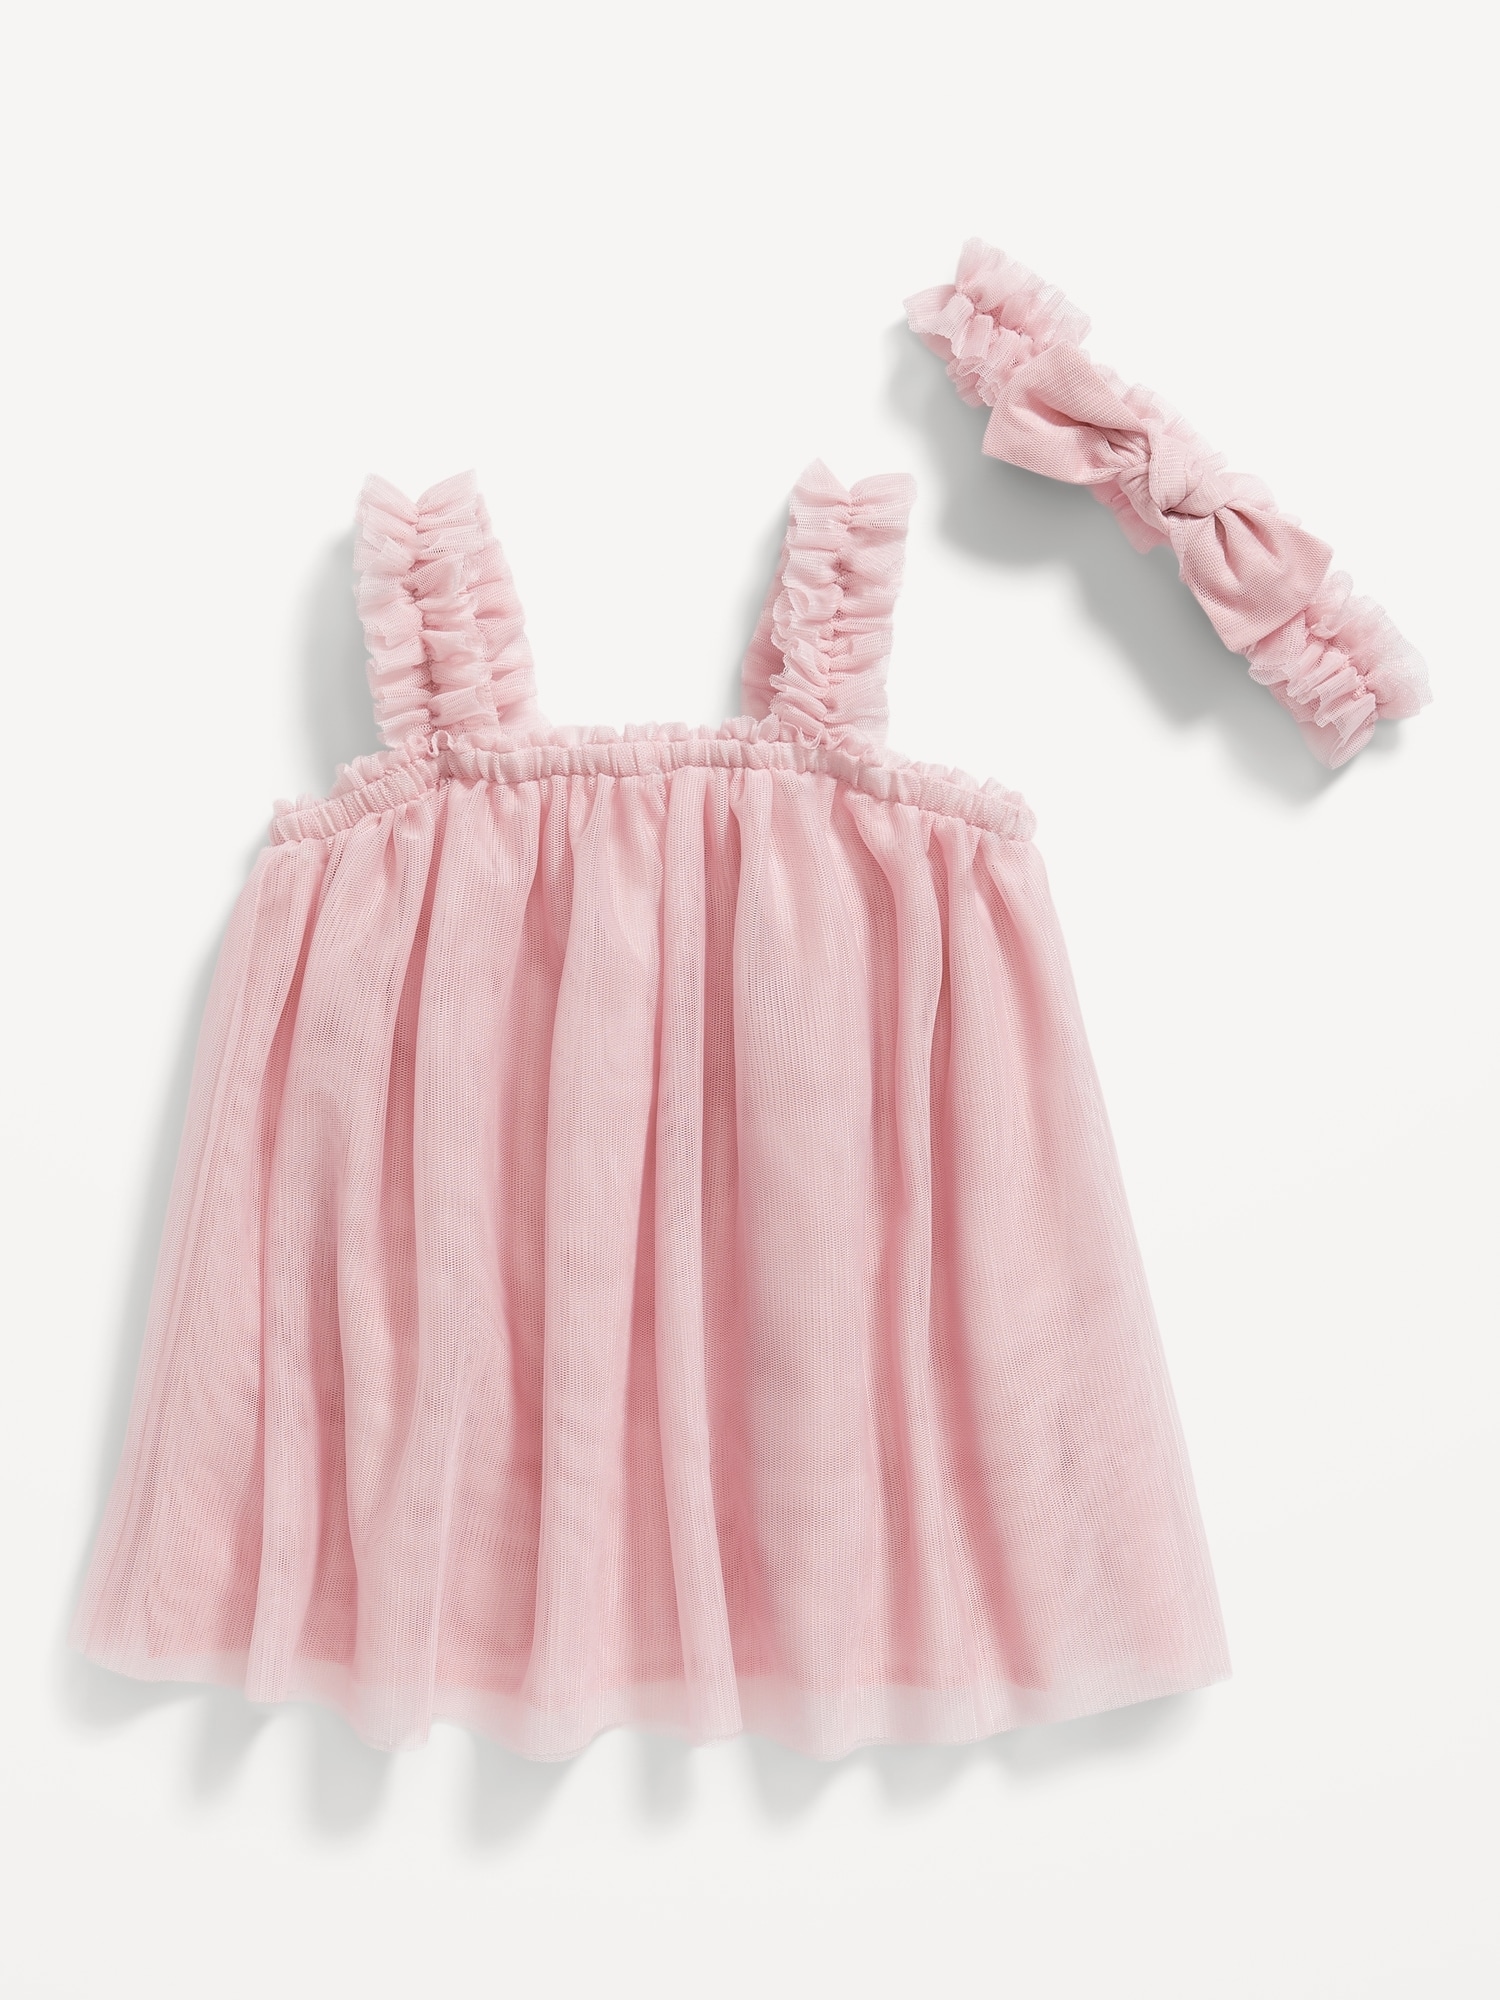 Sleeveless Tulle Swing Dress & Headband Set for Baby